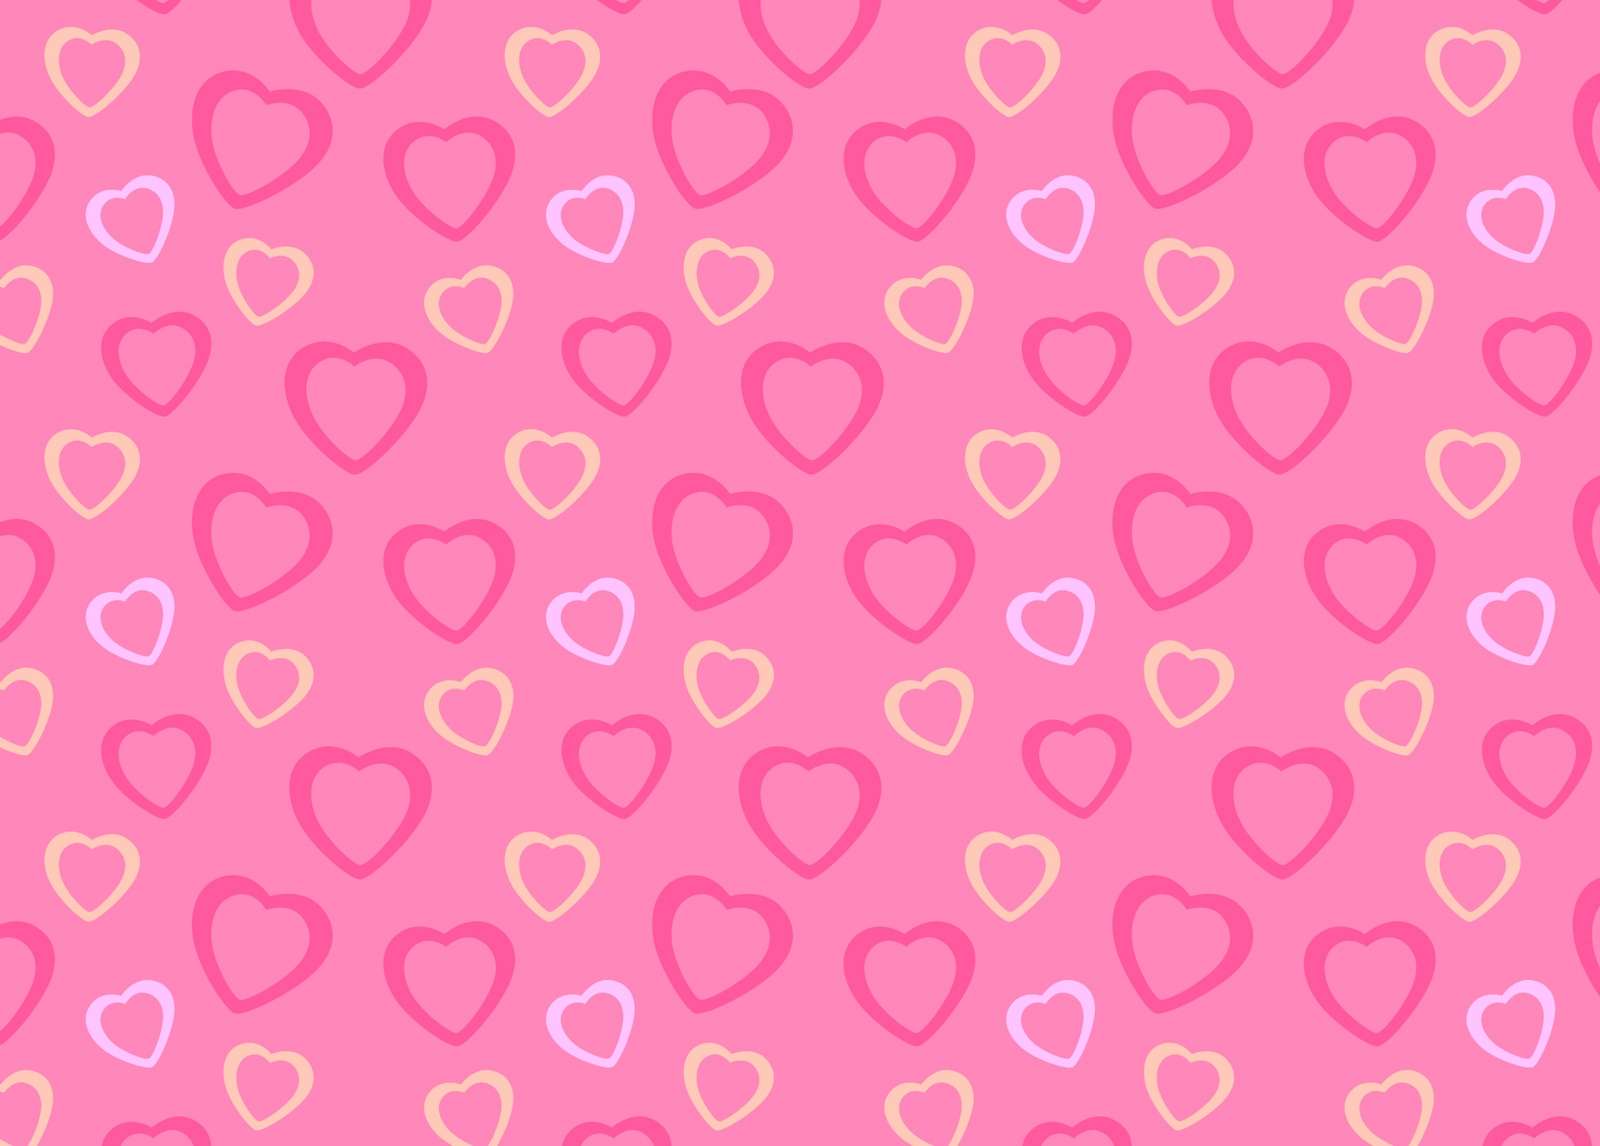 Valentines Love Heart Background Graphic By Genta, 44% OFF